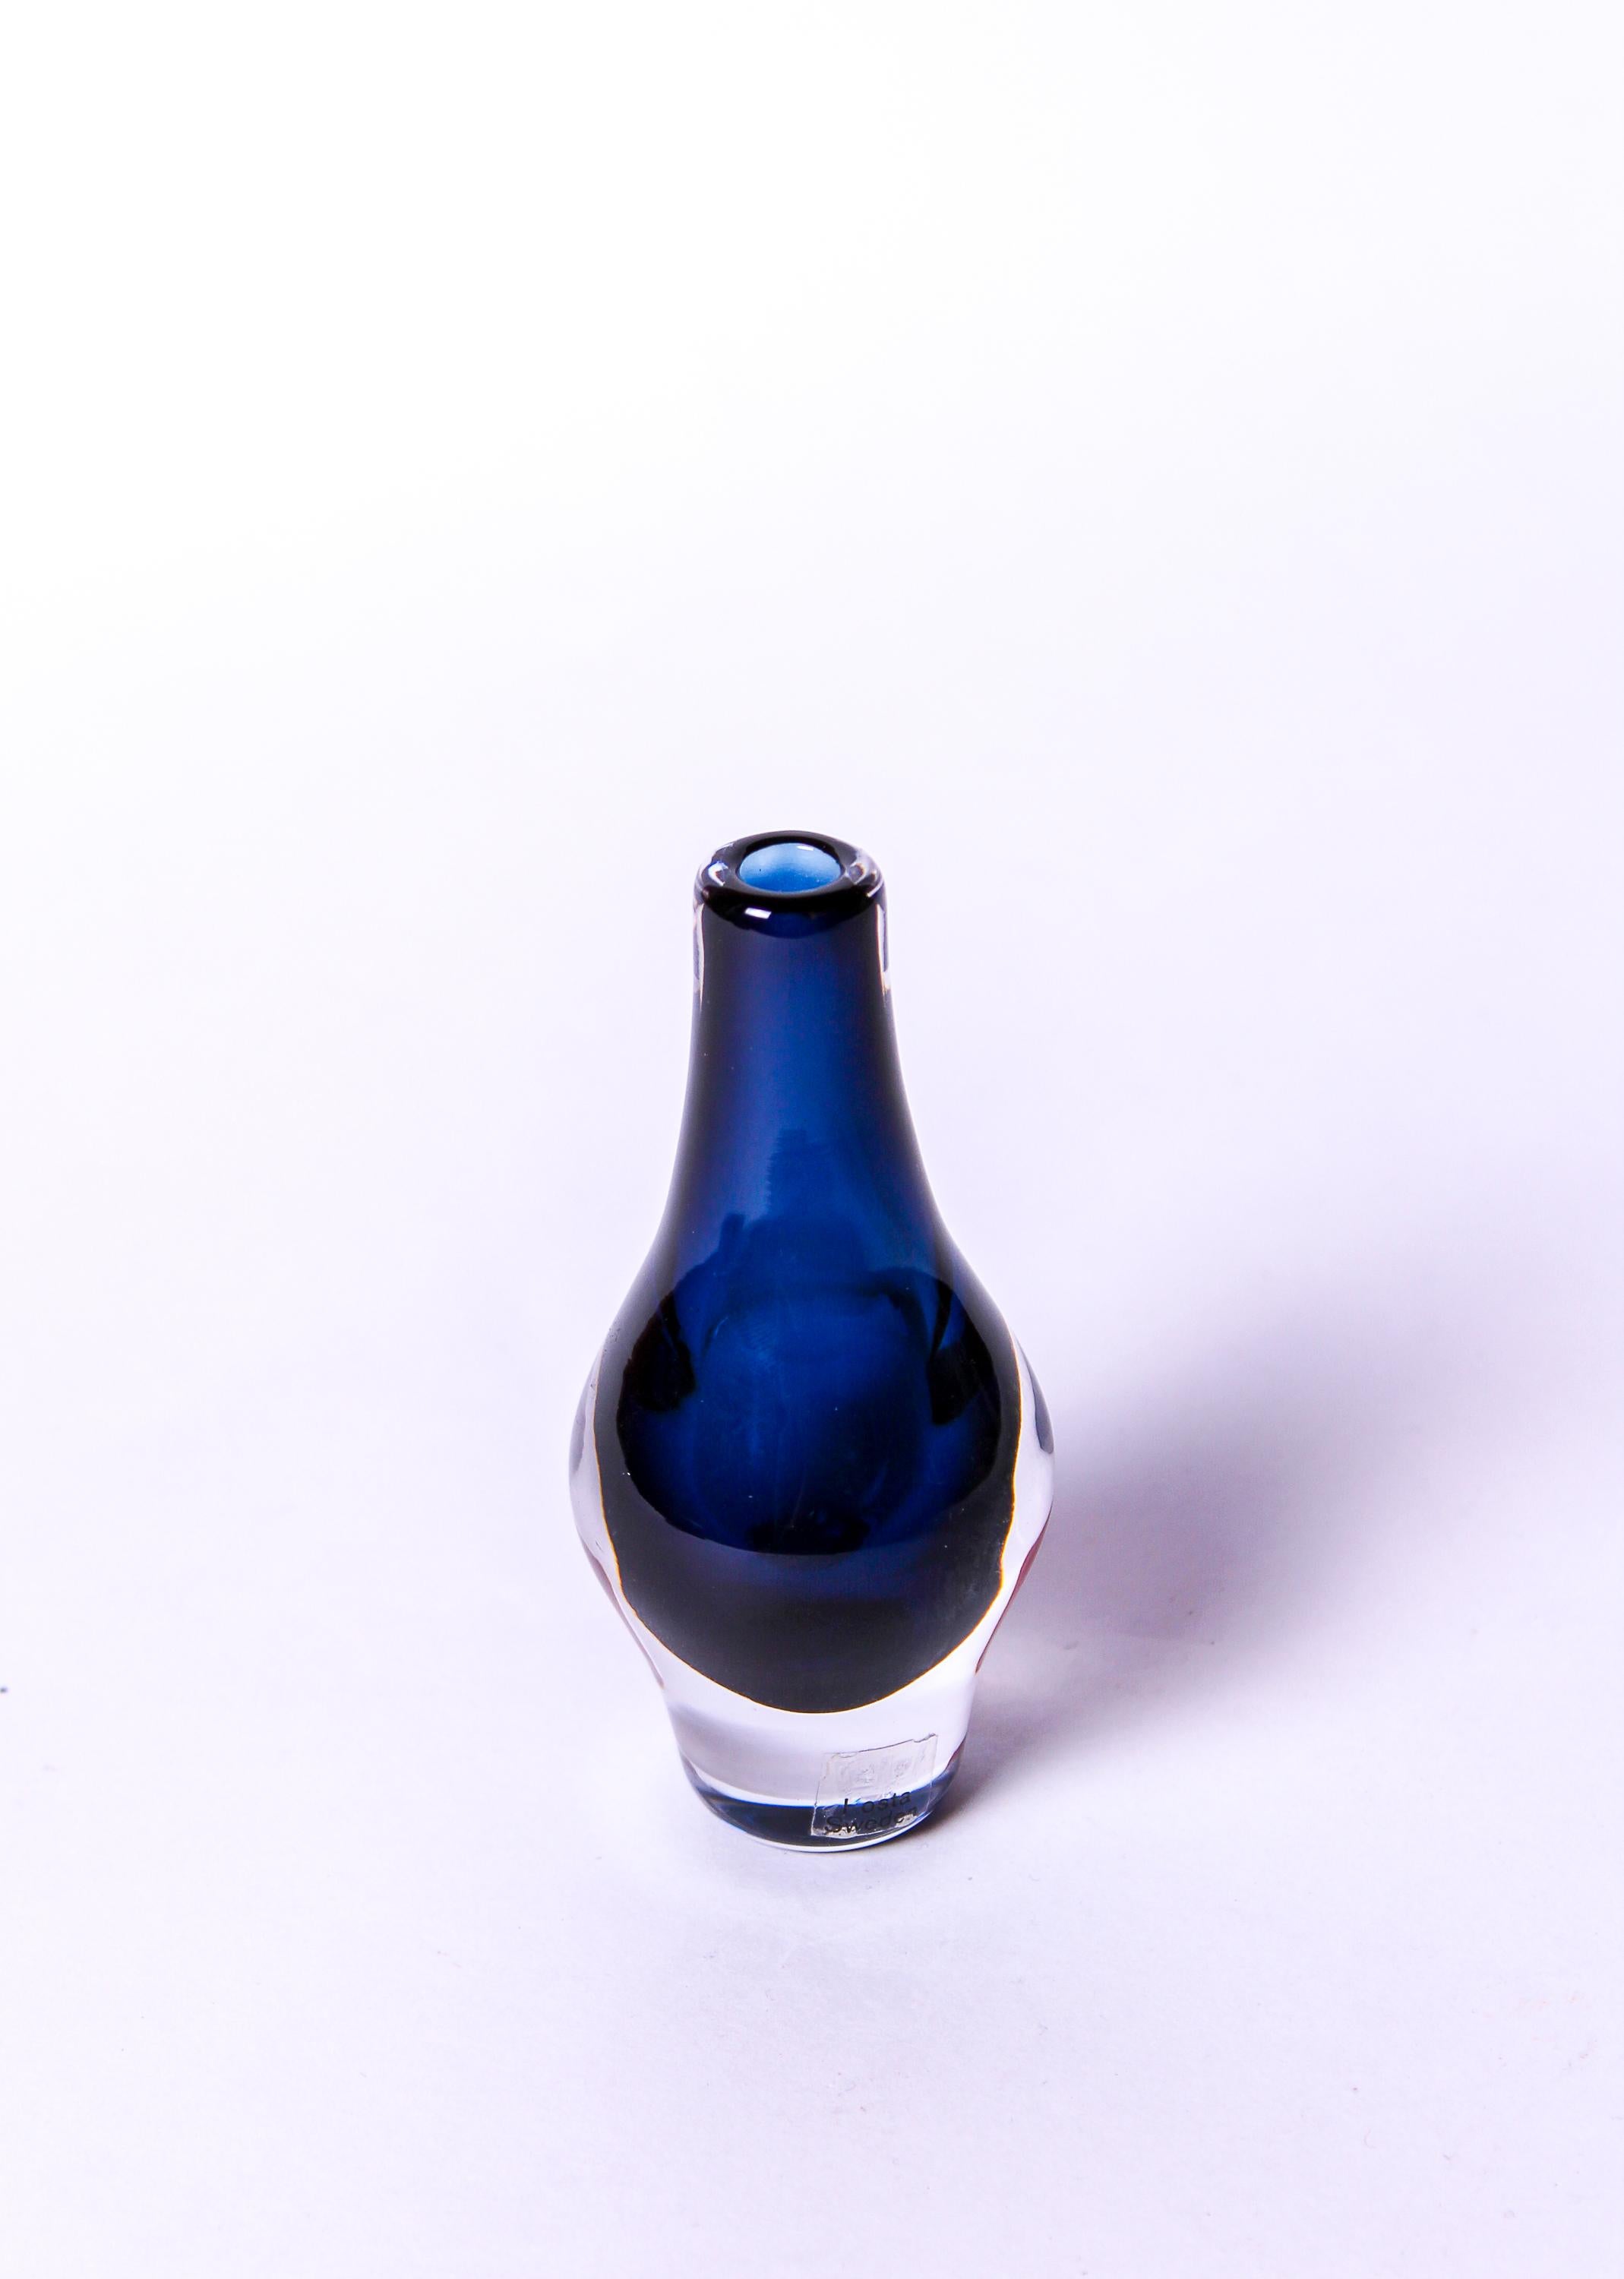 miniature glass vases